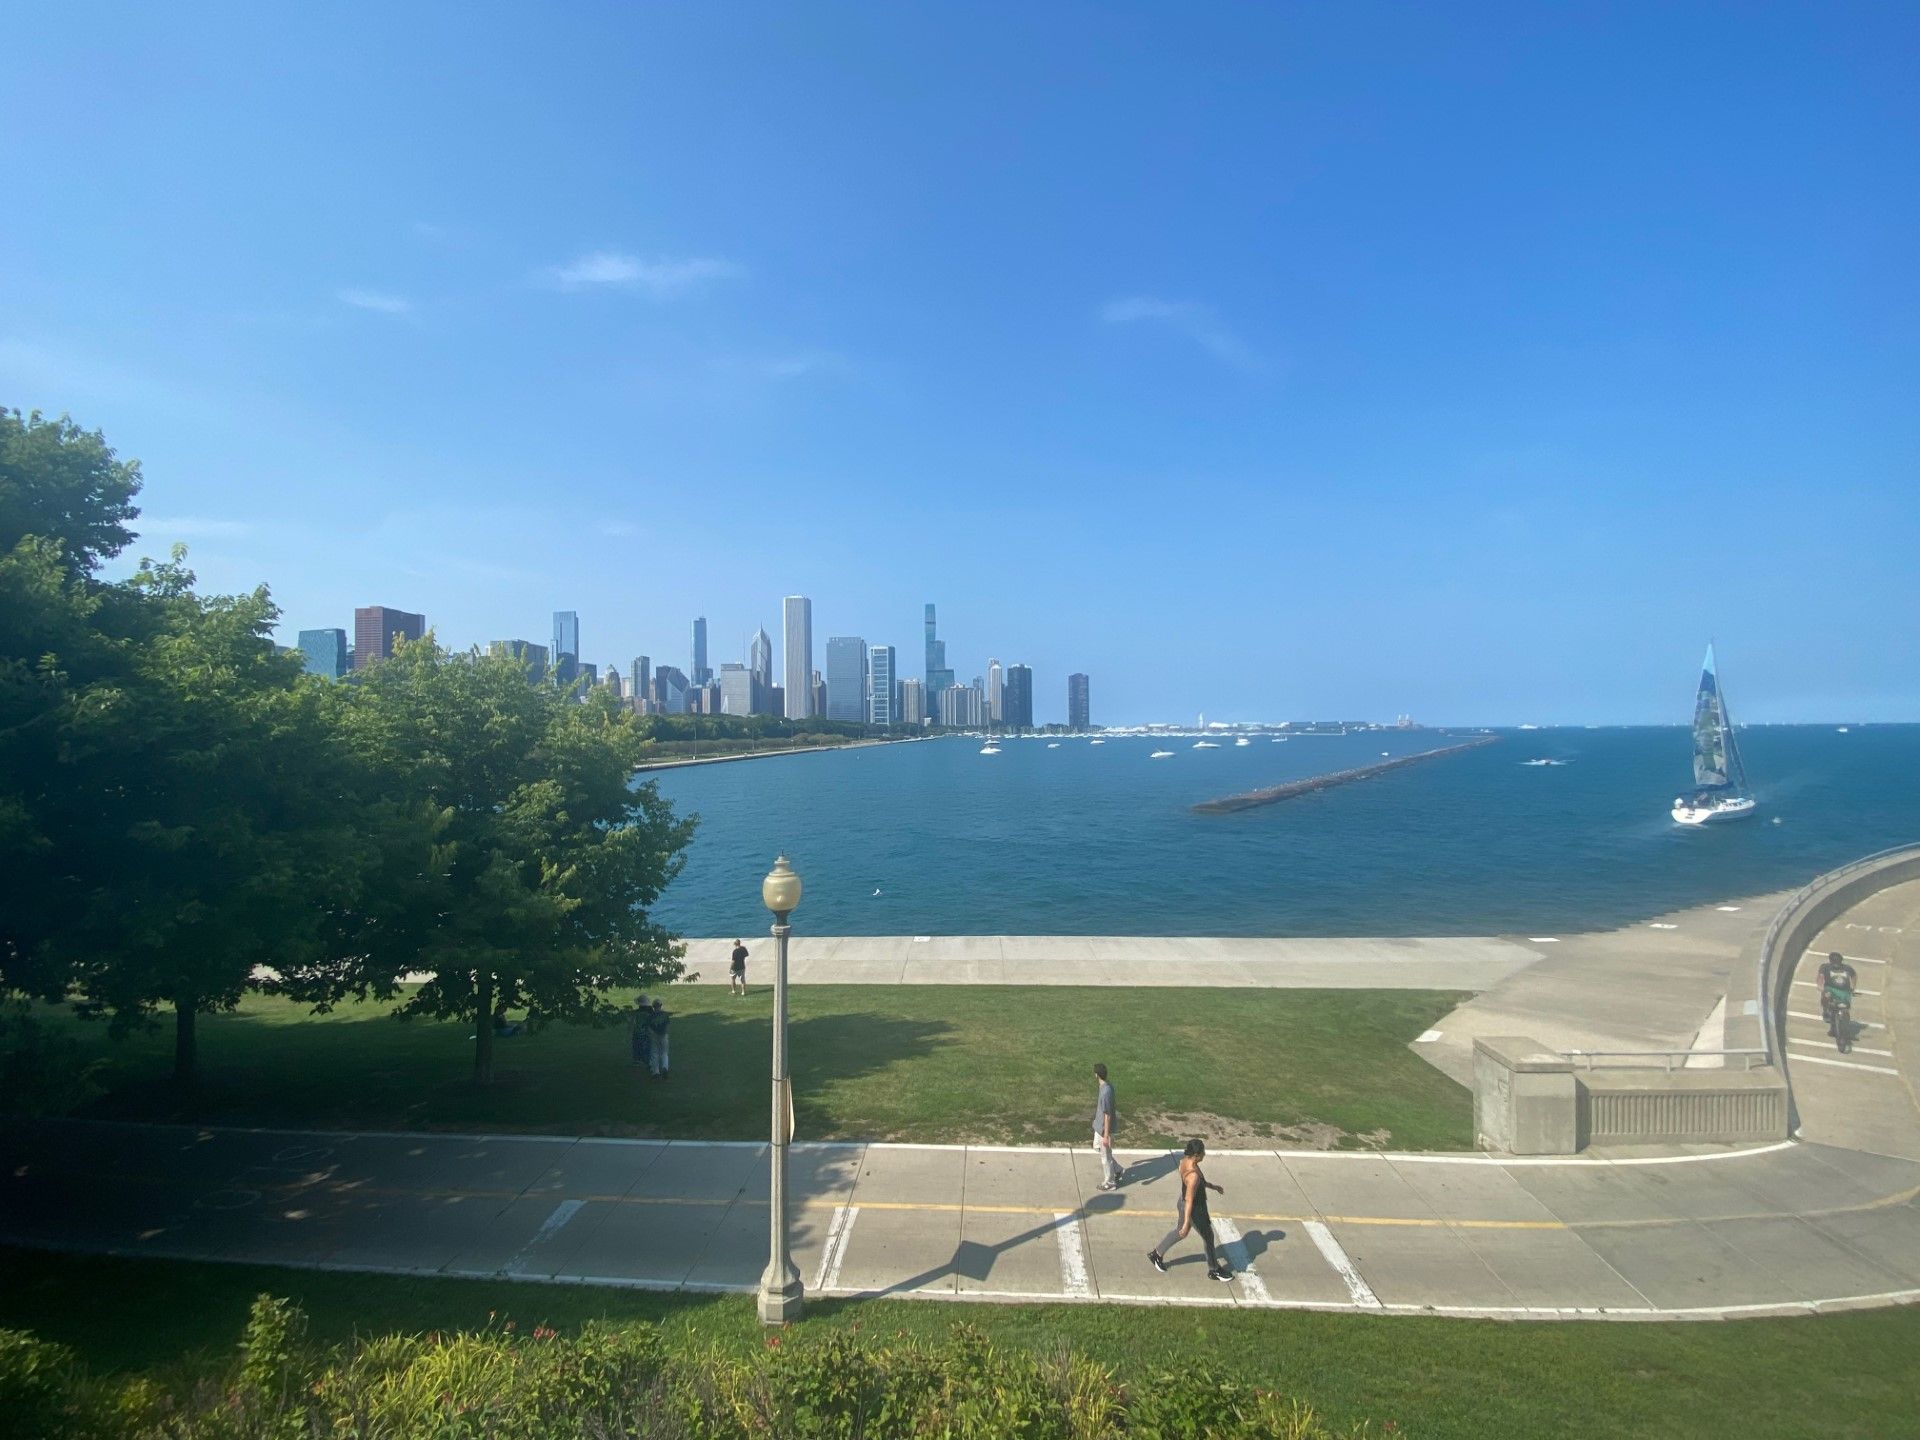 Photodump: Chicago for Blue Team Con 2022